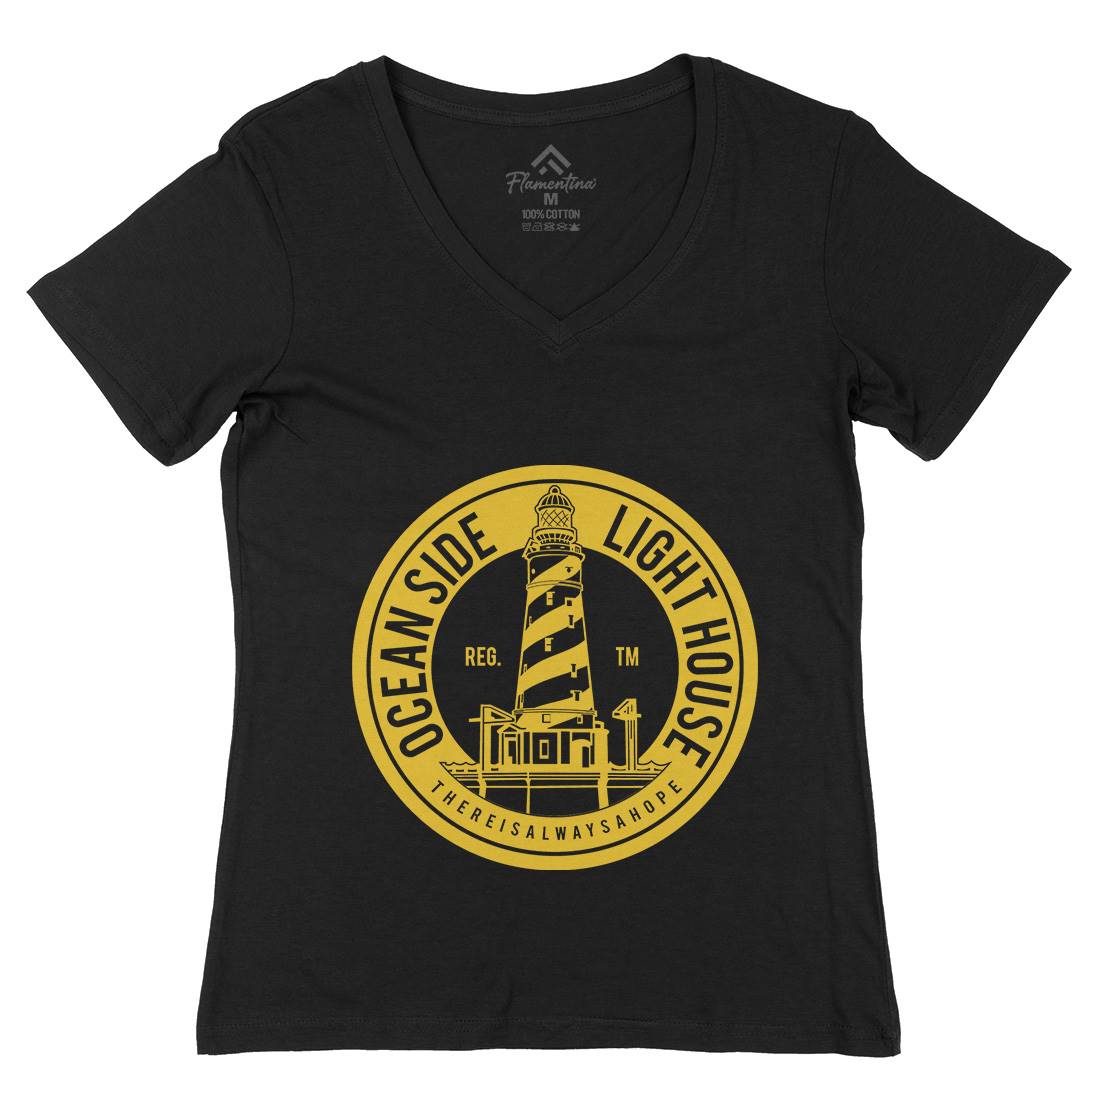 Ocean Side Womens Organic V-Neck T-Shirt Navy A096